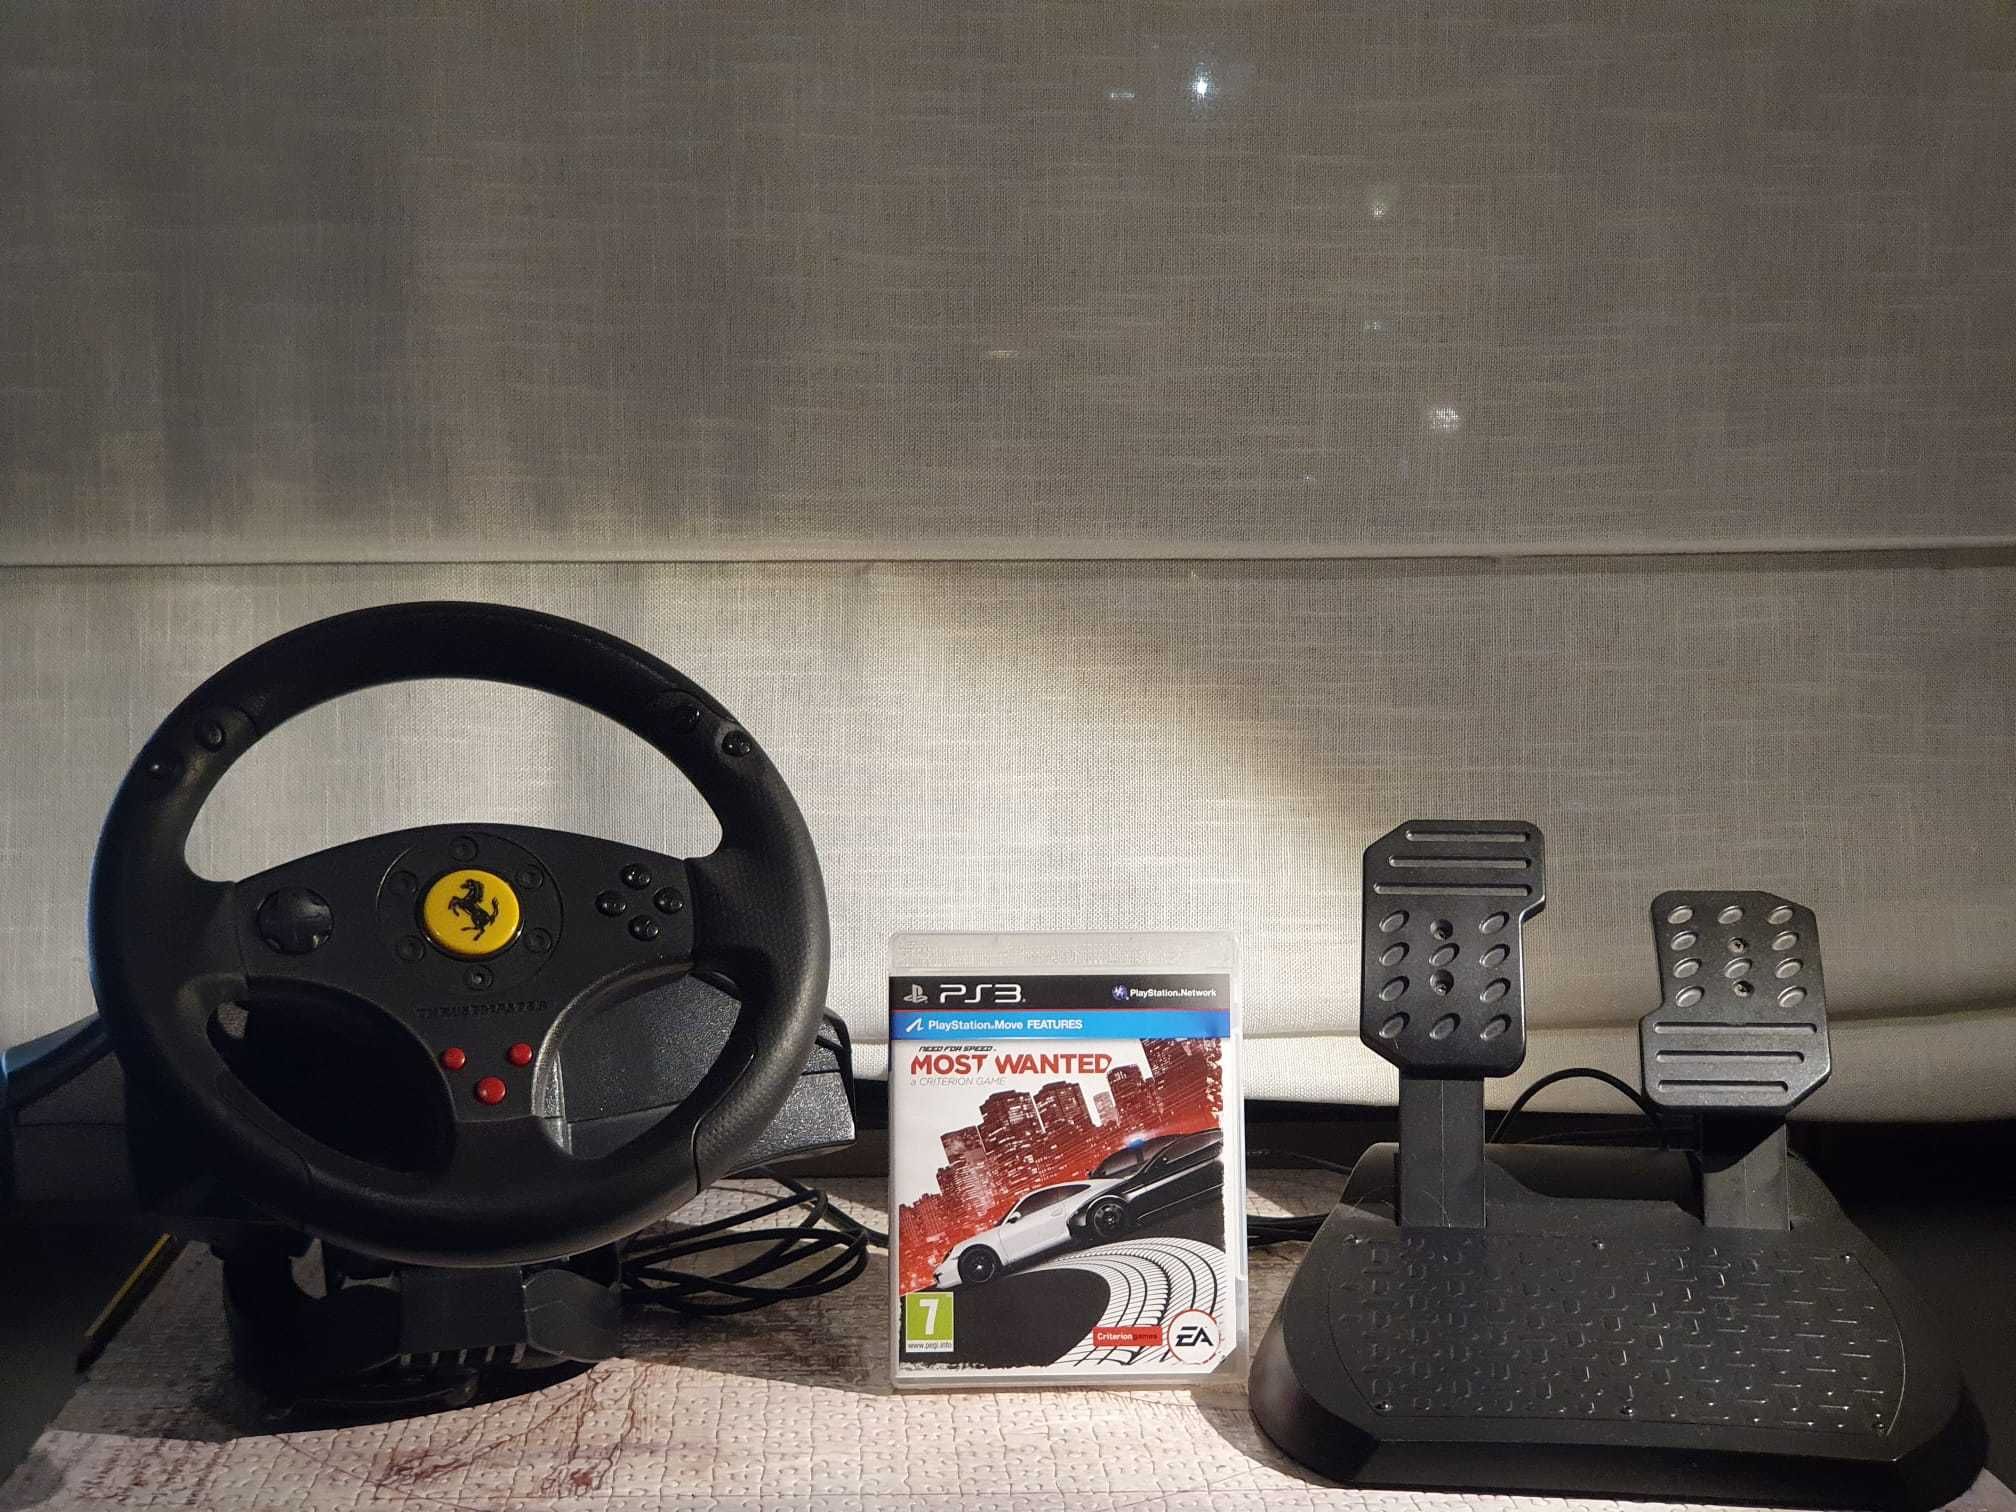 Volante + Pedais Thrustmaster Ferrari Edition - Xbox One / PC / PS3